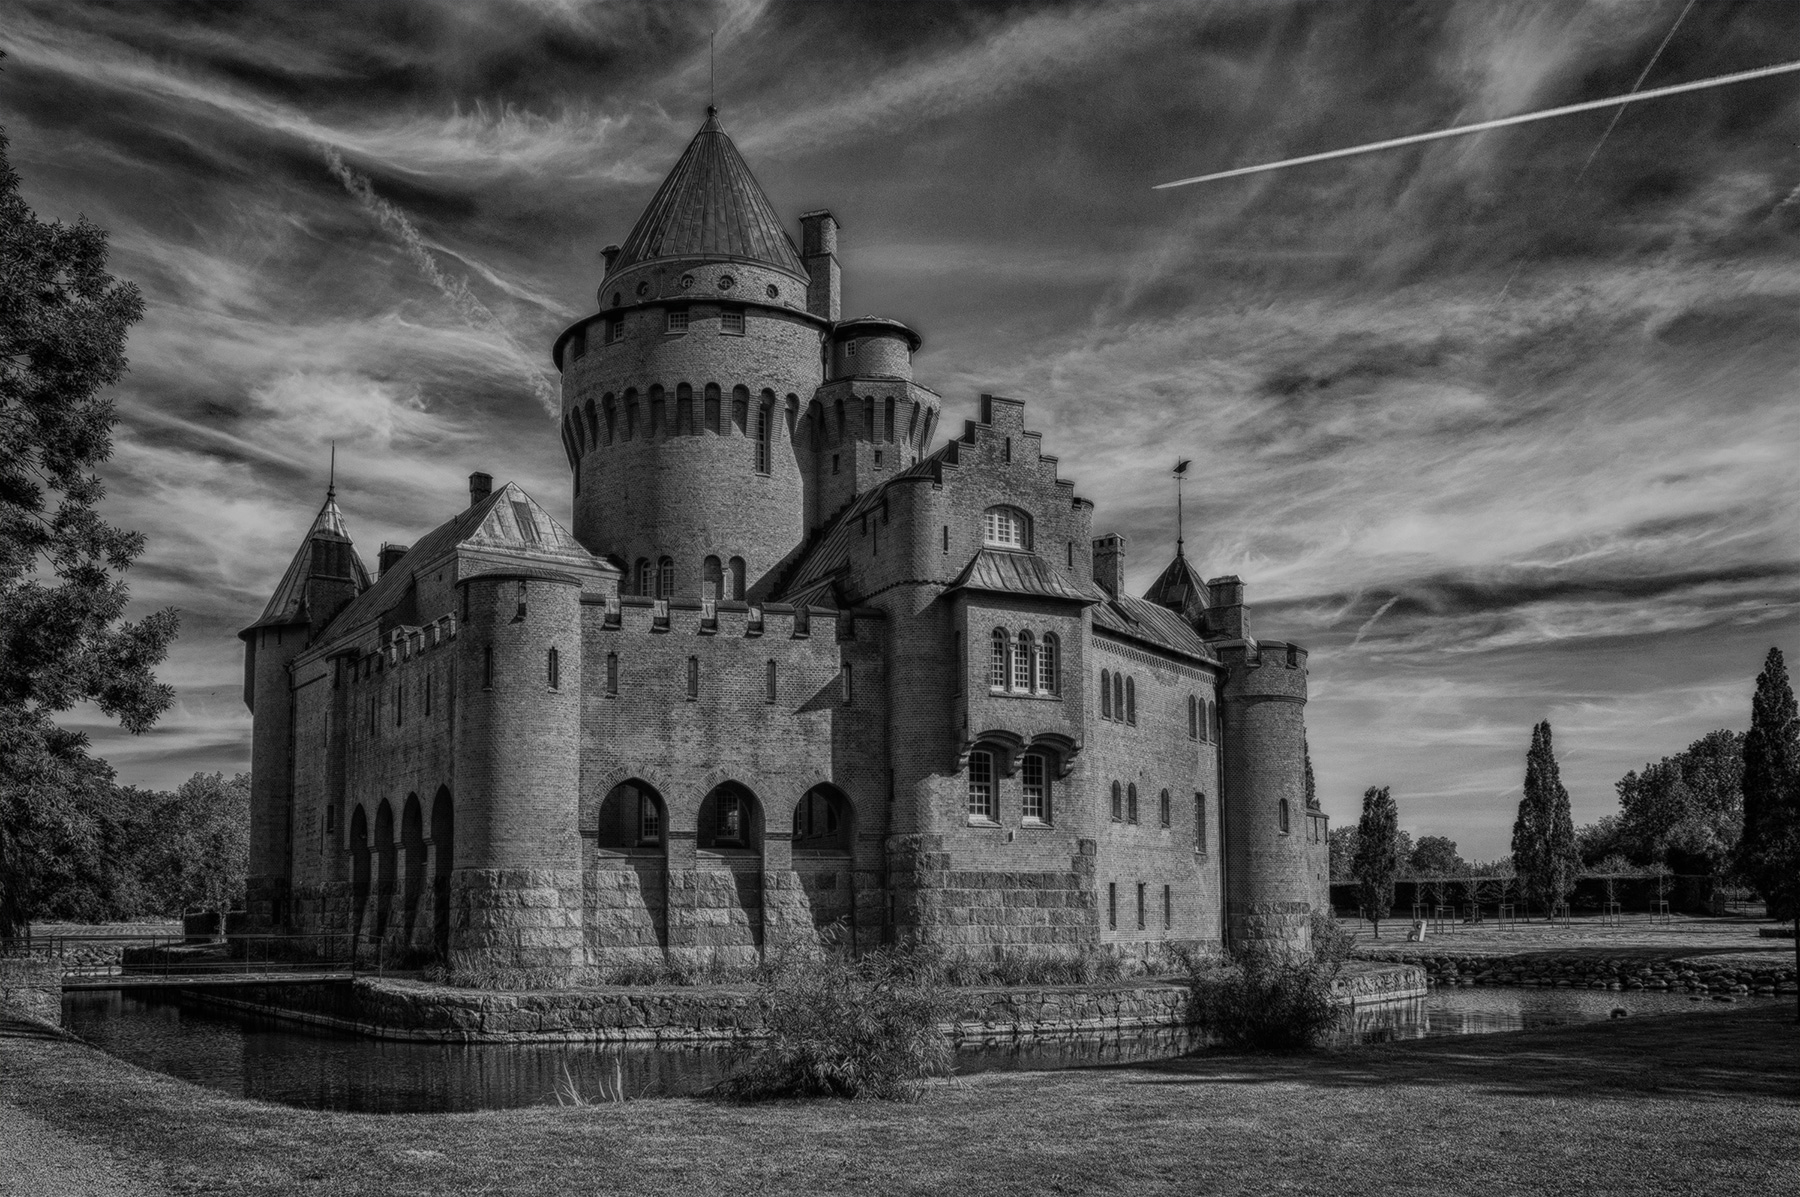 Hjularod Castle